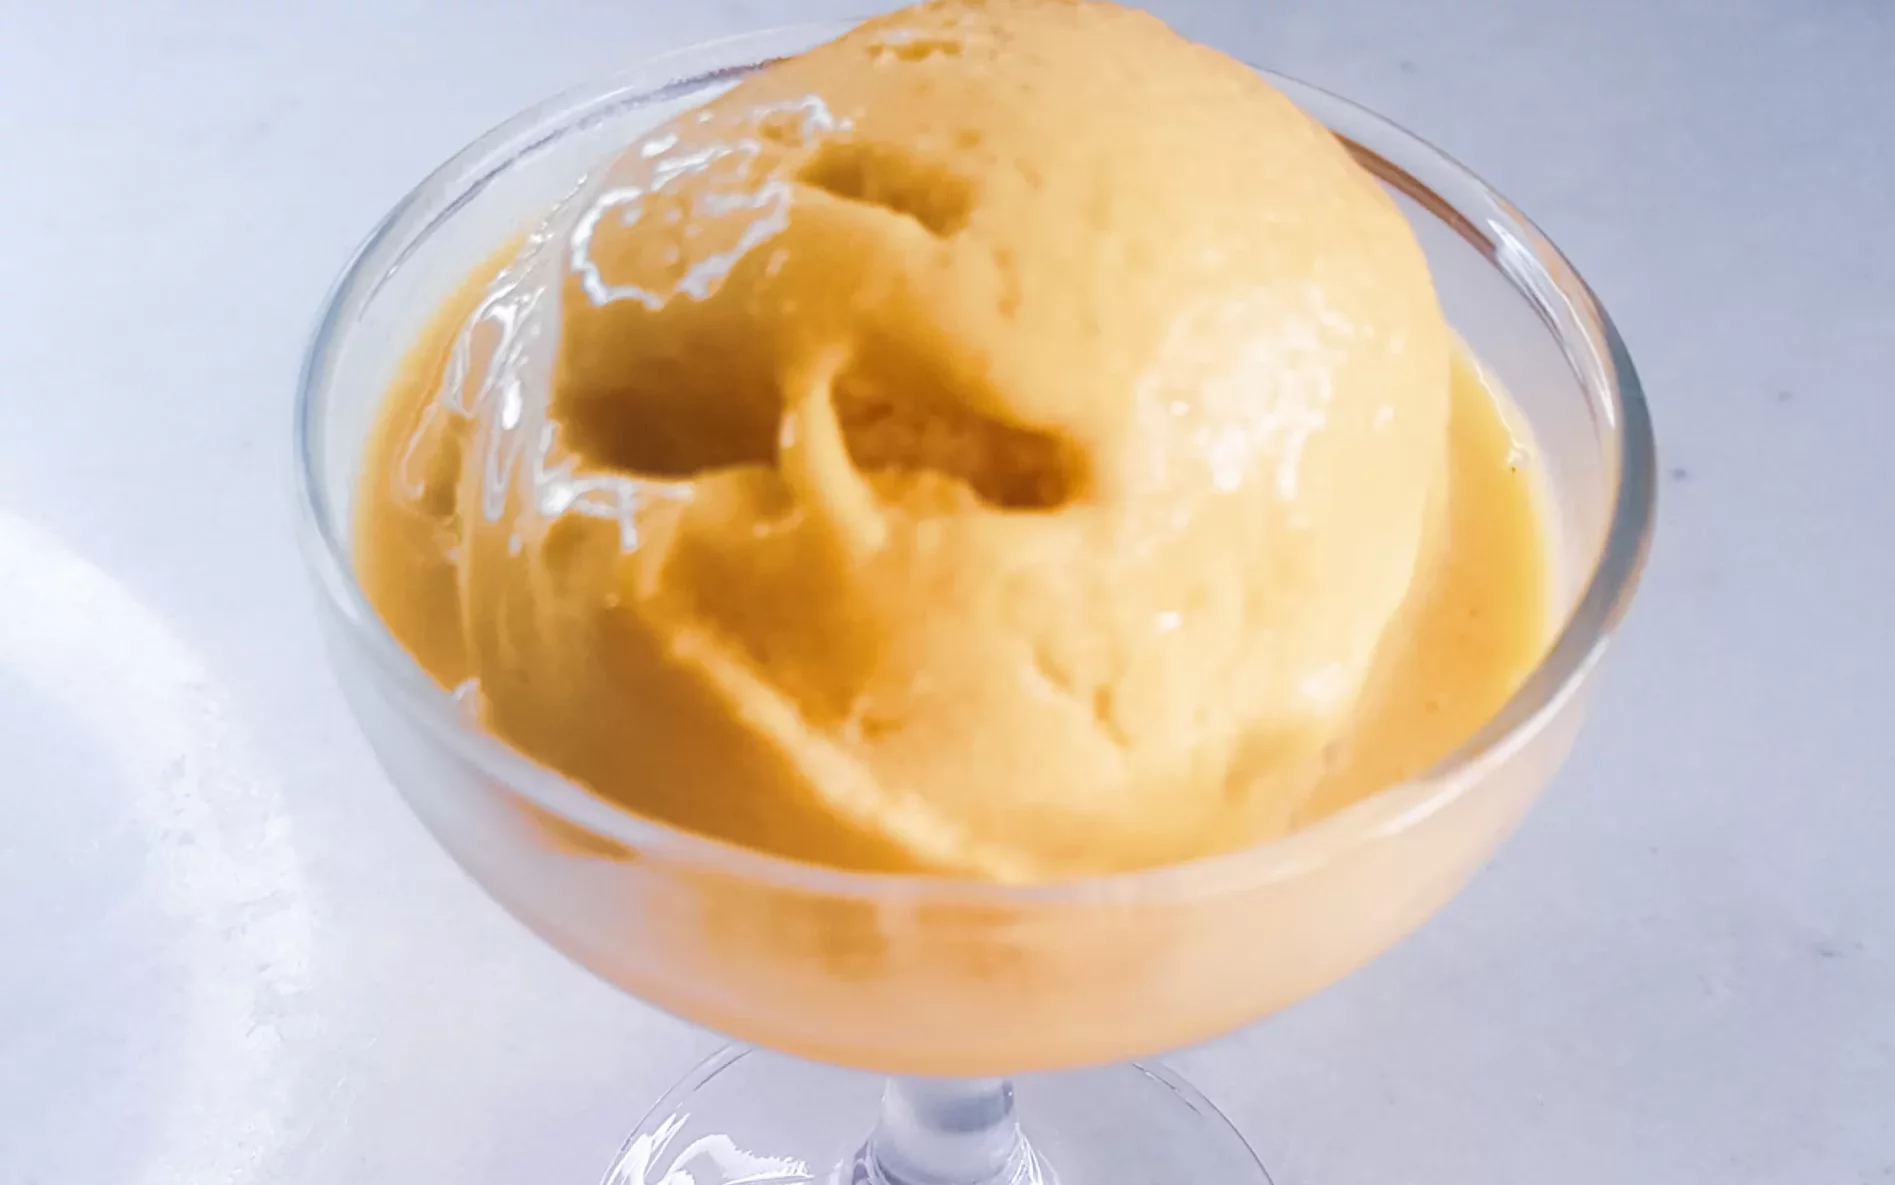 Sugar-free dairy-free mango Ice cream in a dessert glass.